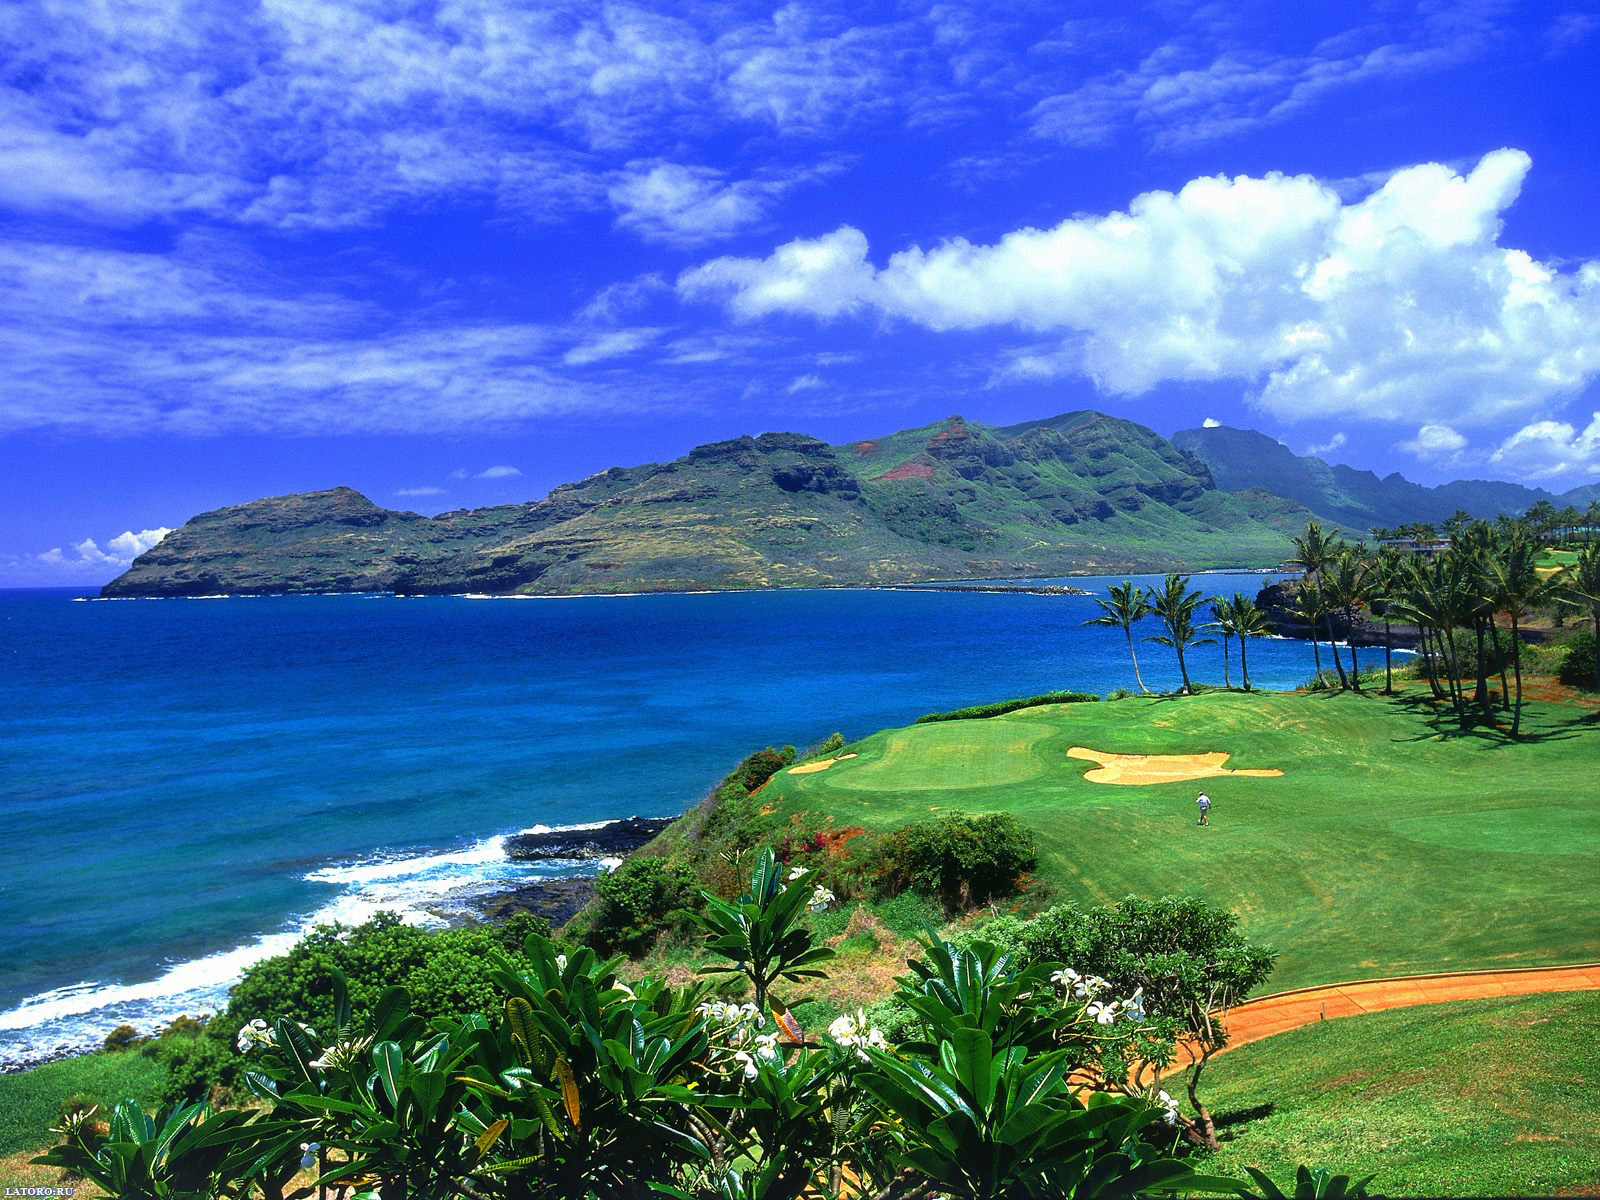 Hawaiian islands Desktop Wallpapers FREE on Latorocom